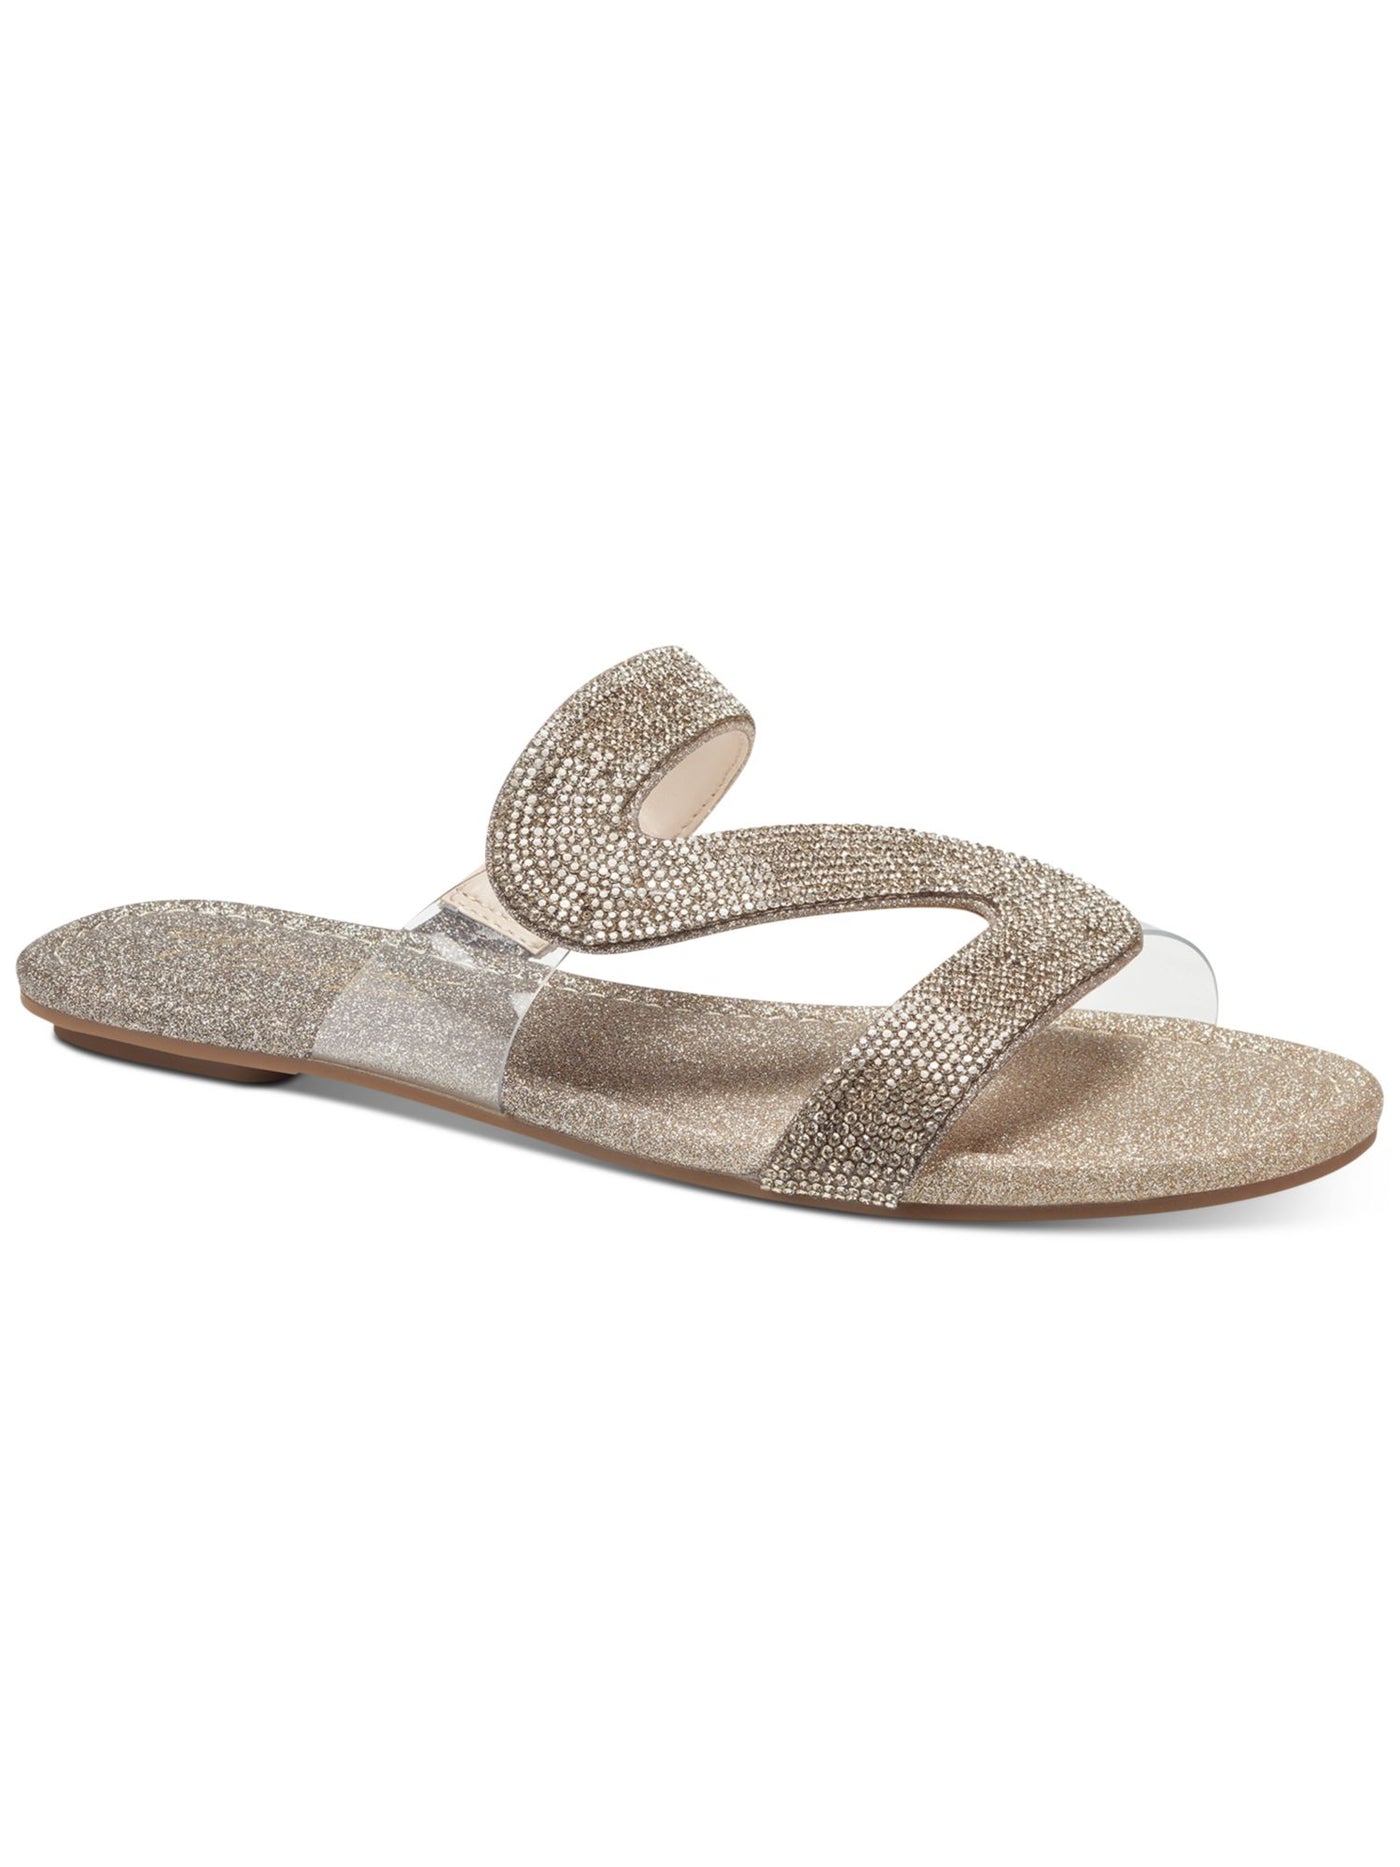 THALIA SODI Womens Gold Rhinestone Asymmetrical Bianca Round Toe Slip On Sandals Shoes 9 M